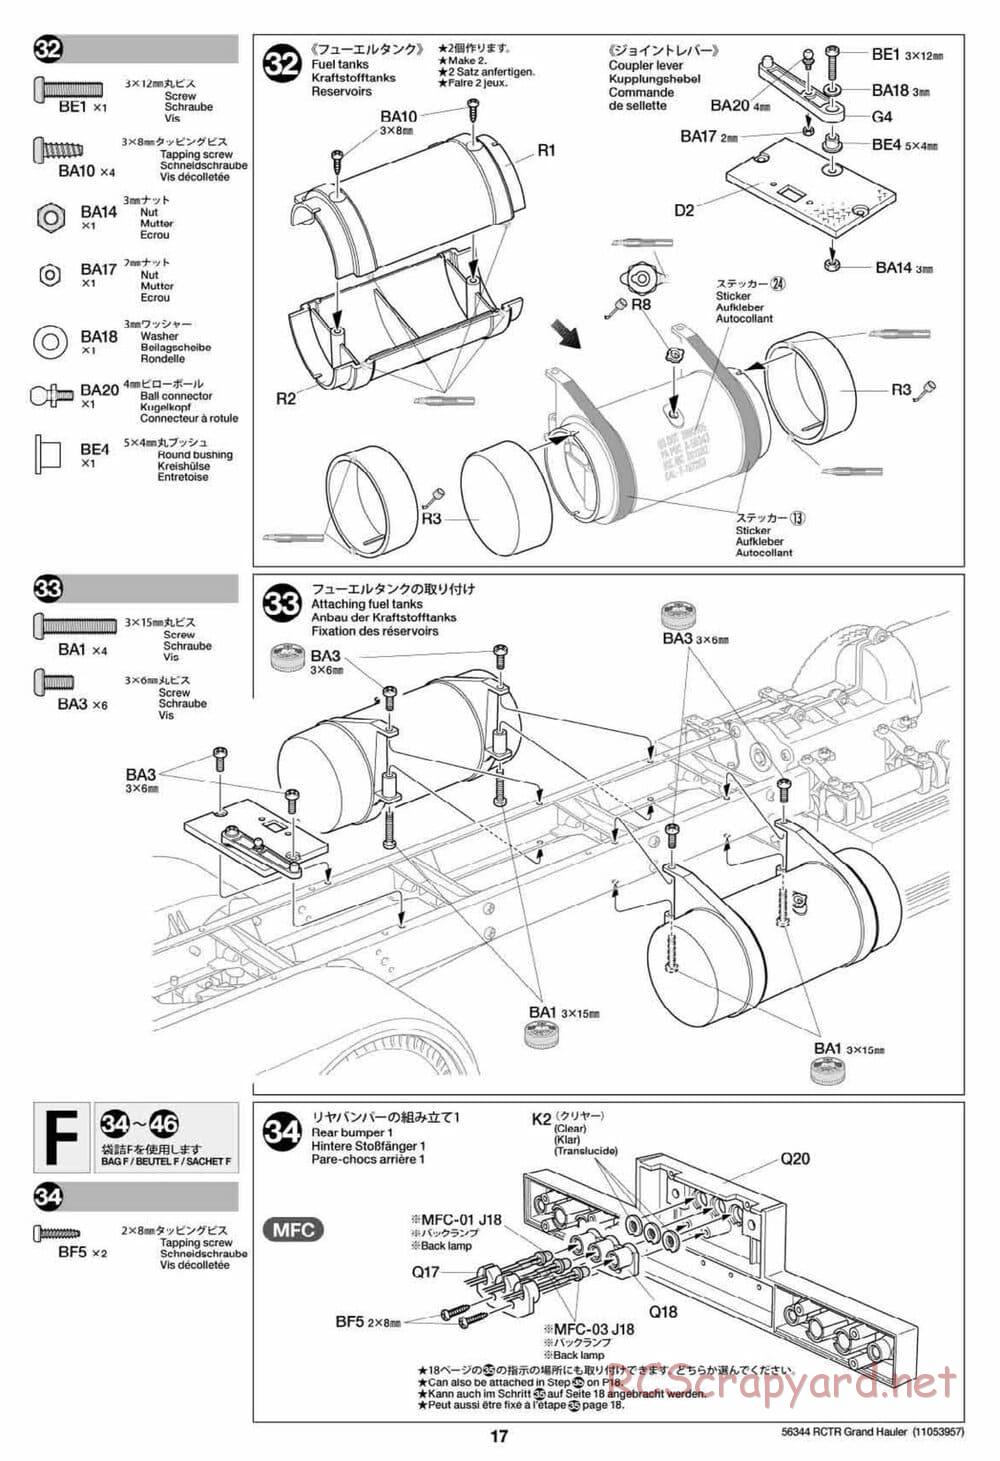 Tamiya - Grand Hauler Tractor Truck Chassis - Manual - Page 17